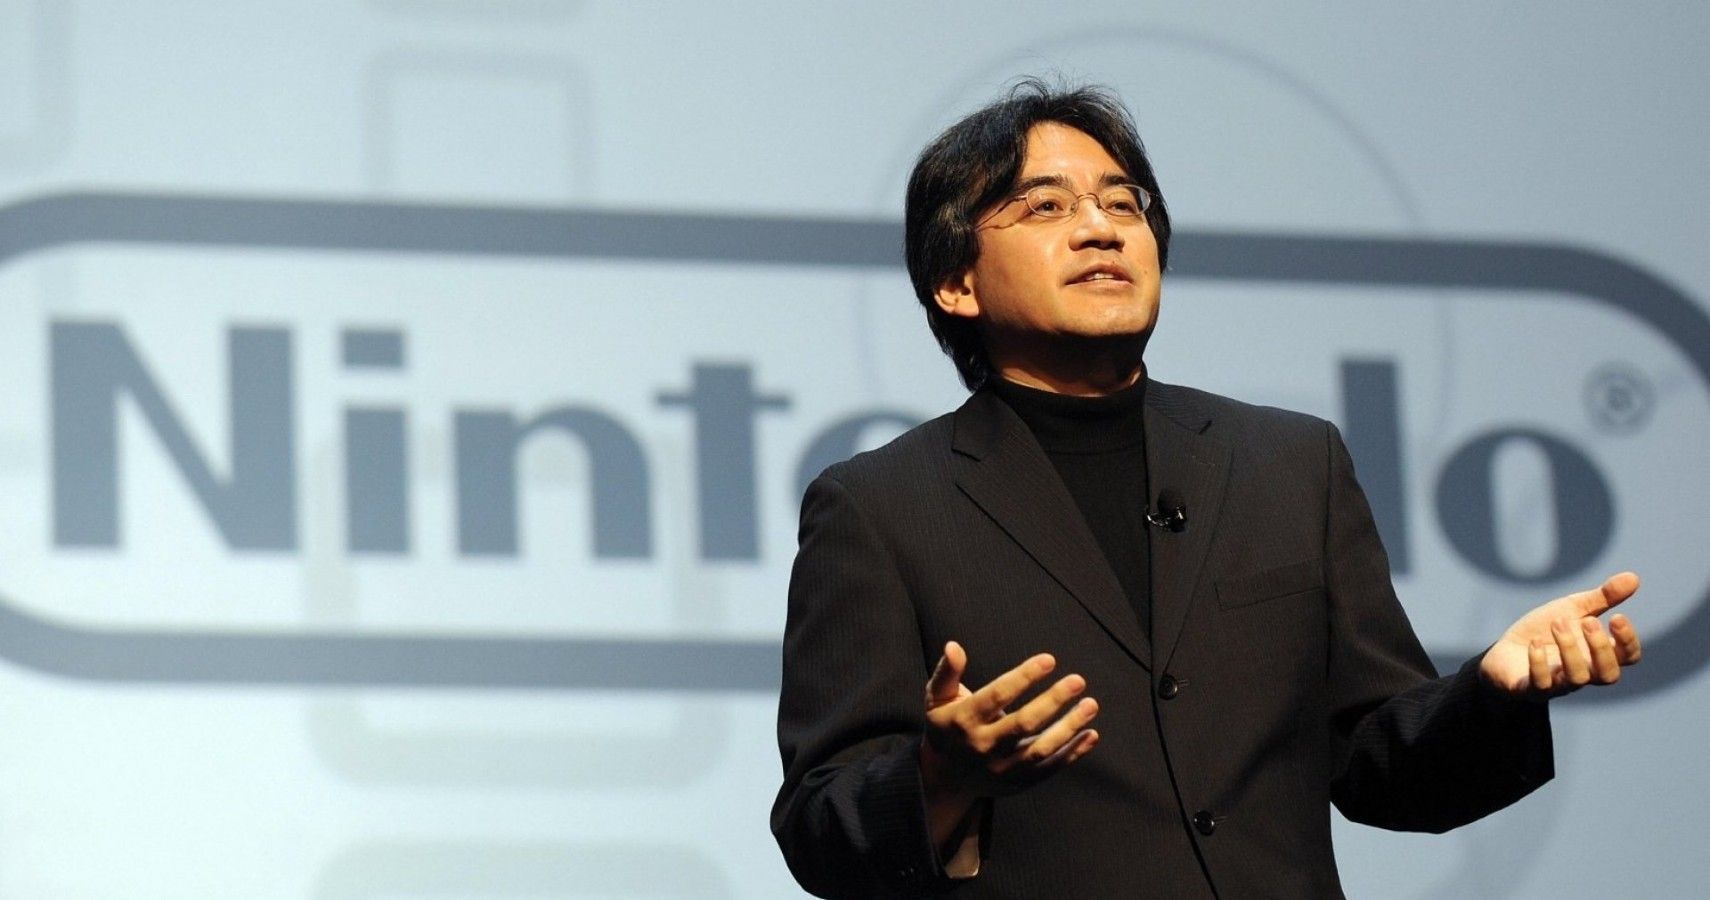 Satoru Iwata, CEO of Nintendo speaking at a